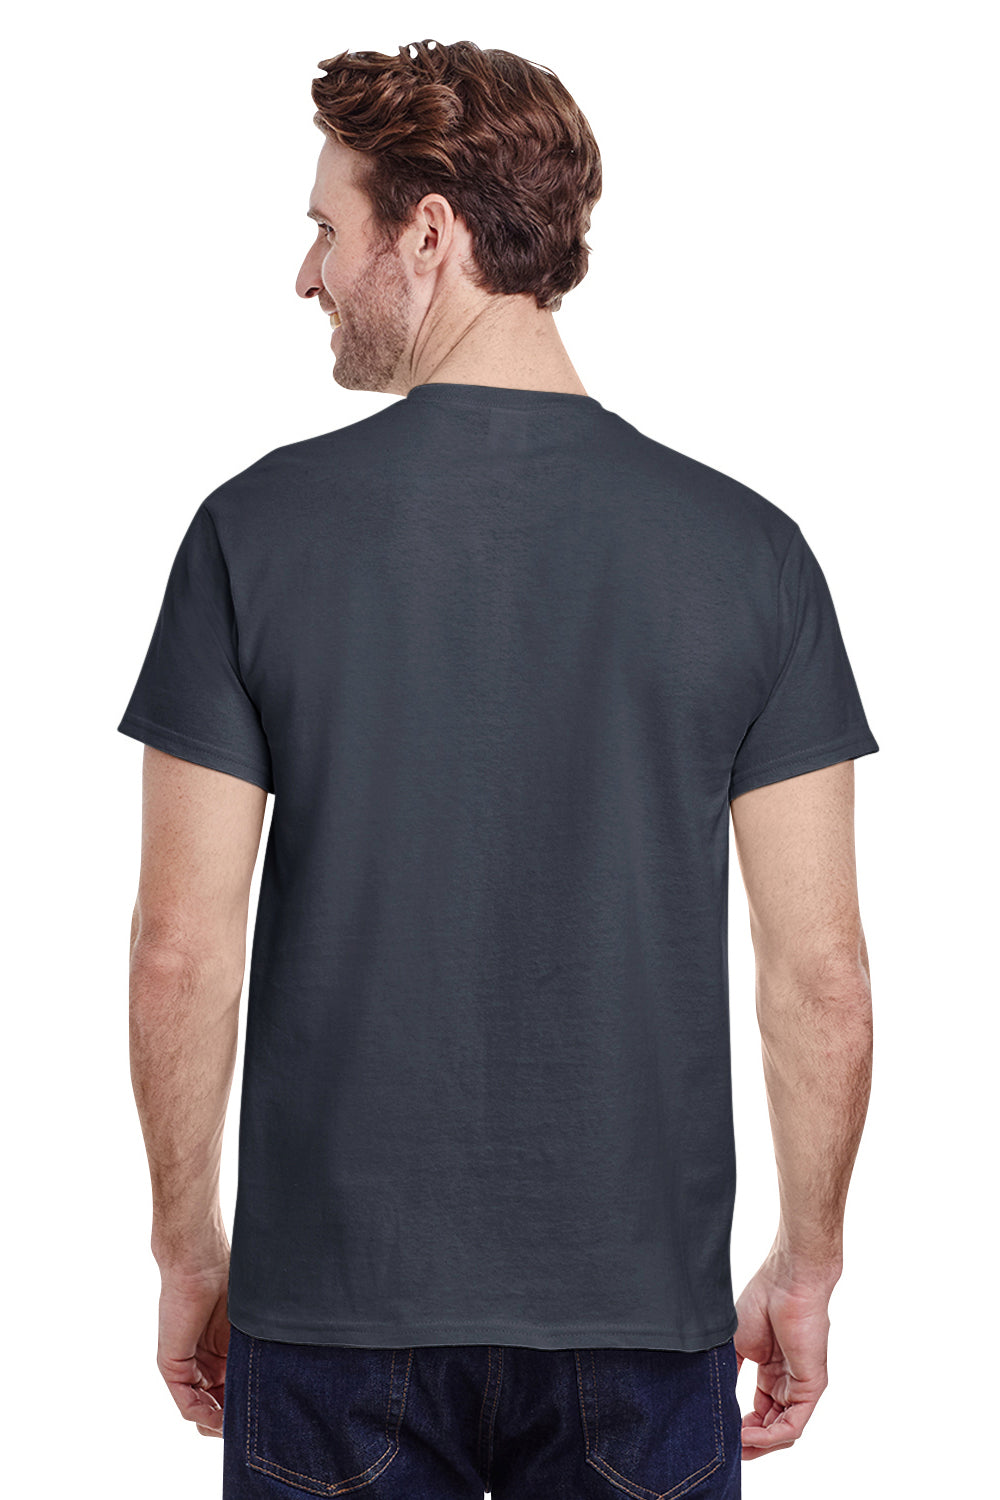 Gildan G500 Mens Short Sleeve Crewneck T-Shirt Charcoal Grey Back